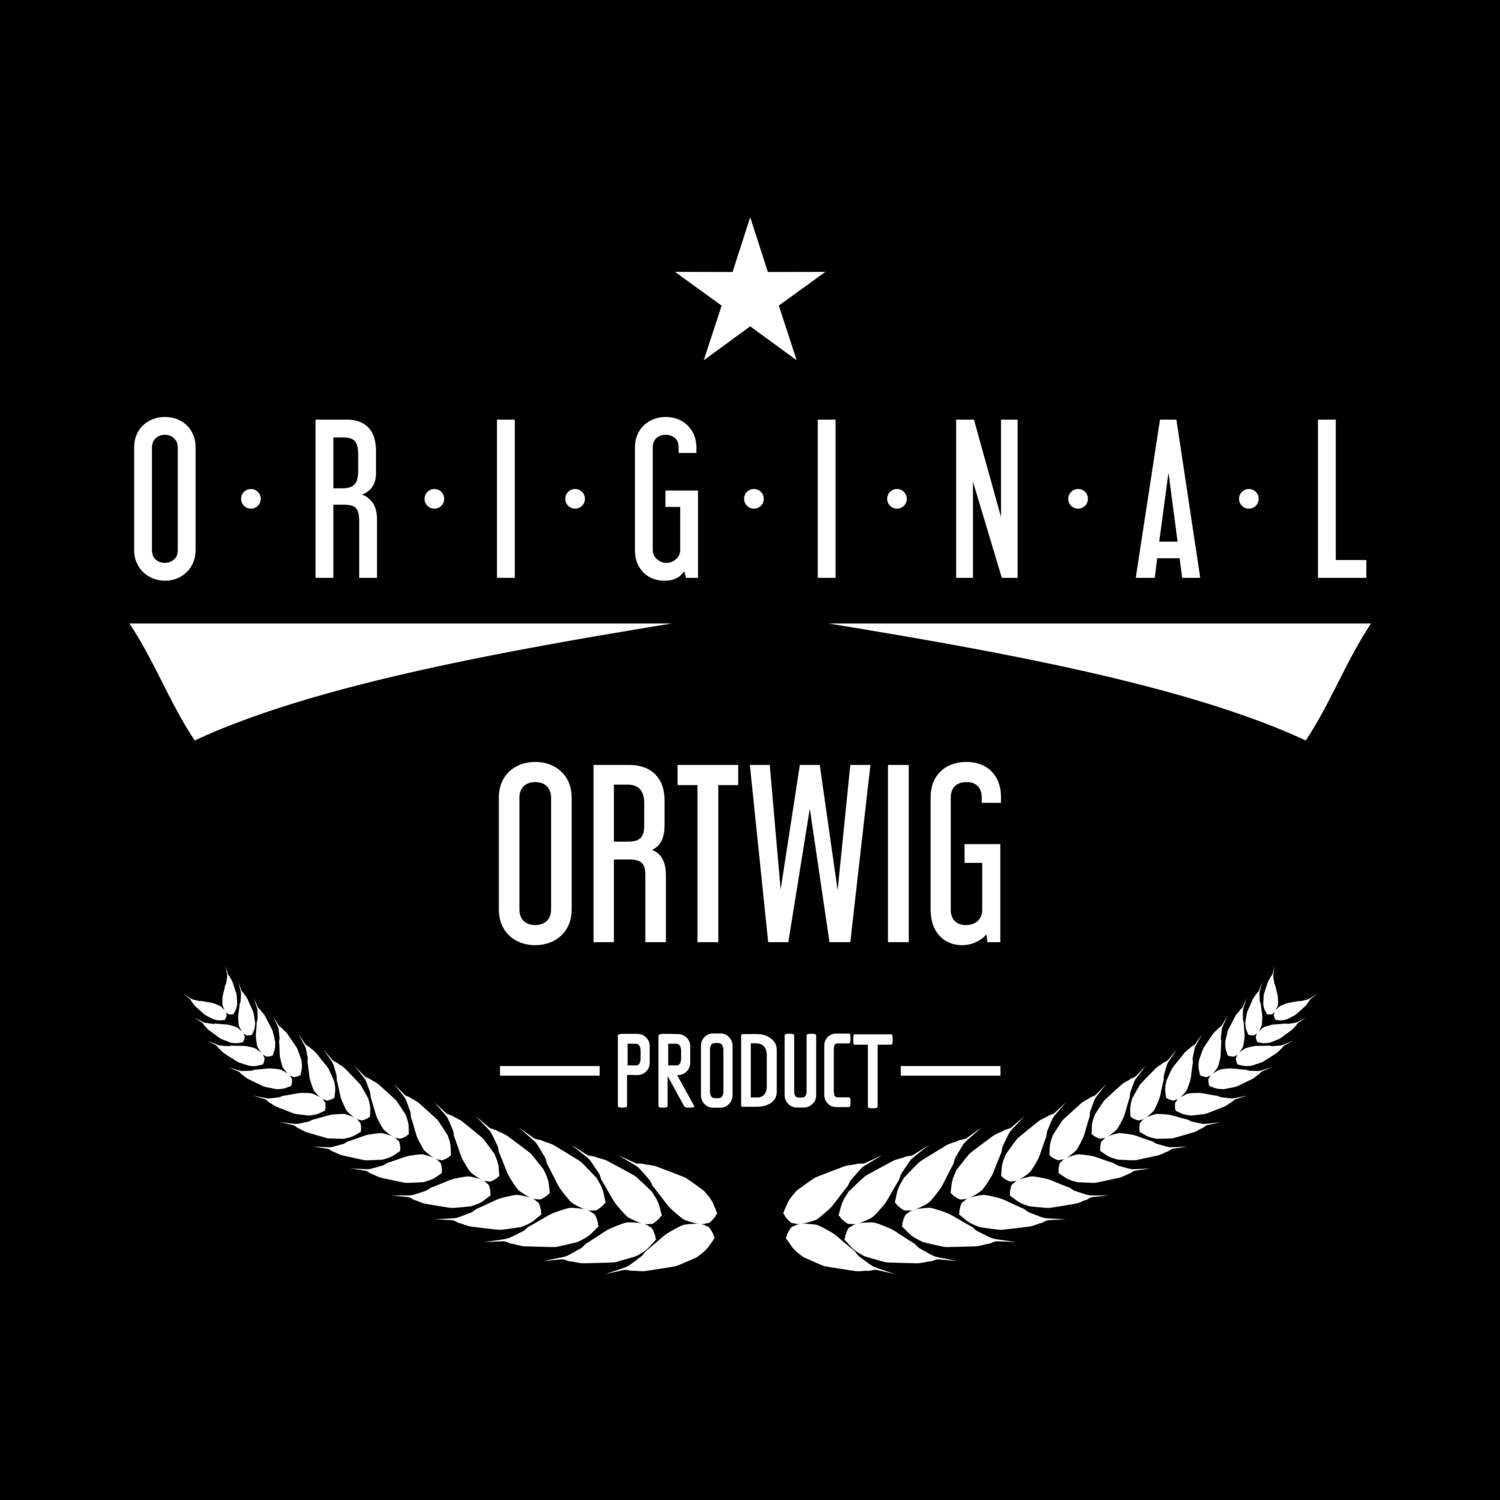 Ortwig T-Shirt »Original Product«